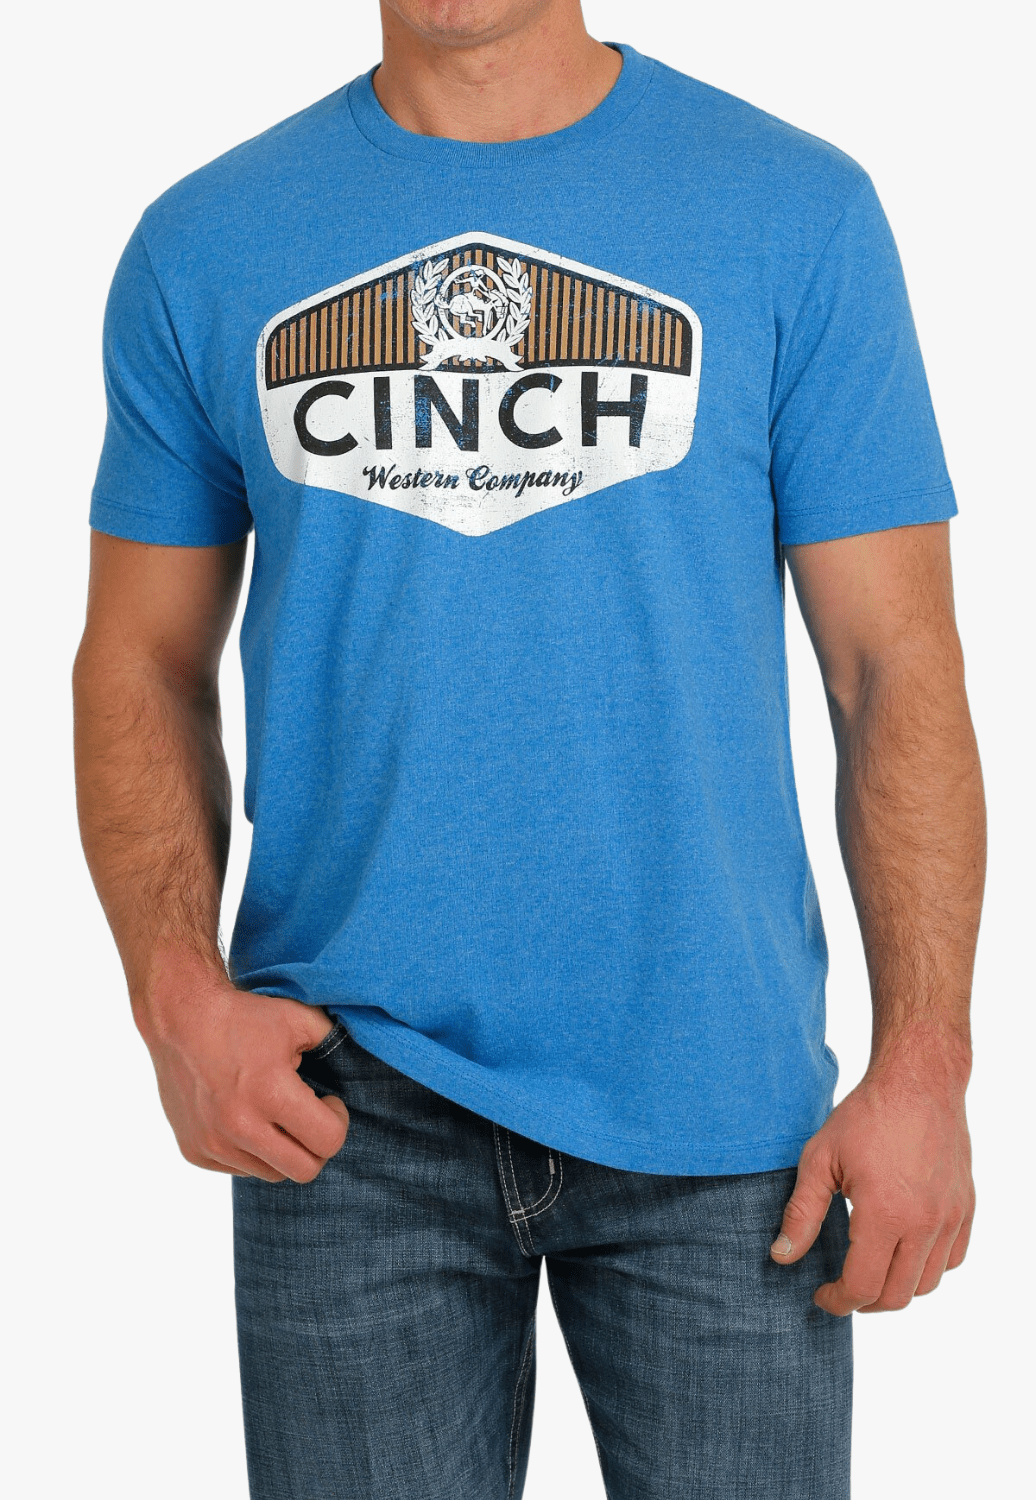 Cinch CLOTHING-MensT-Shirts Cinch Mens Western Company T-Shirt